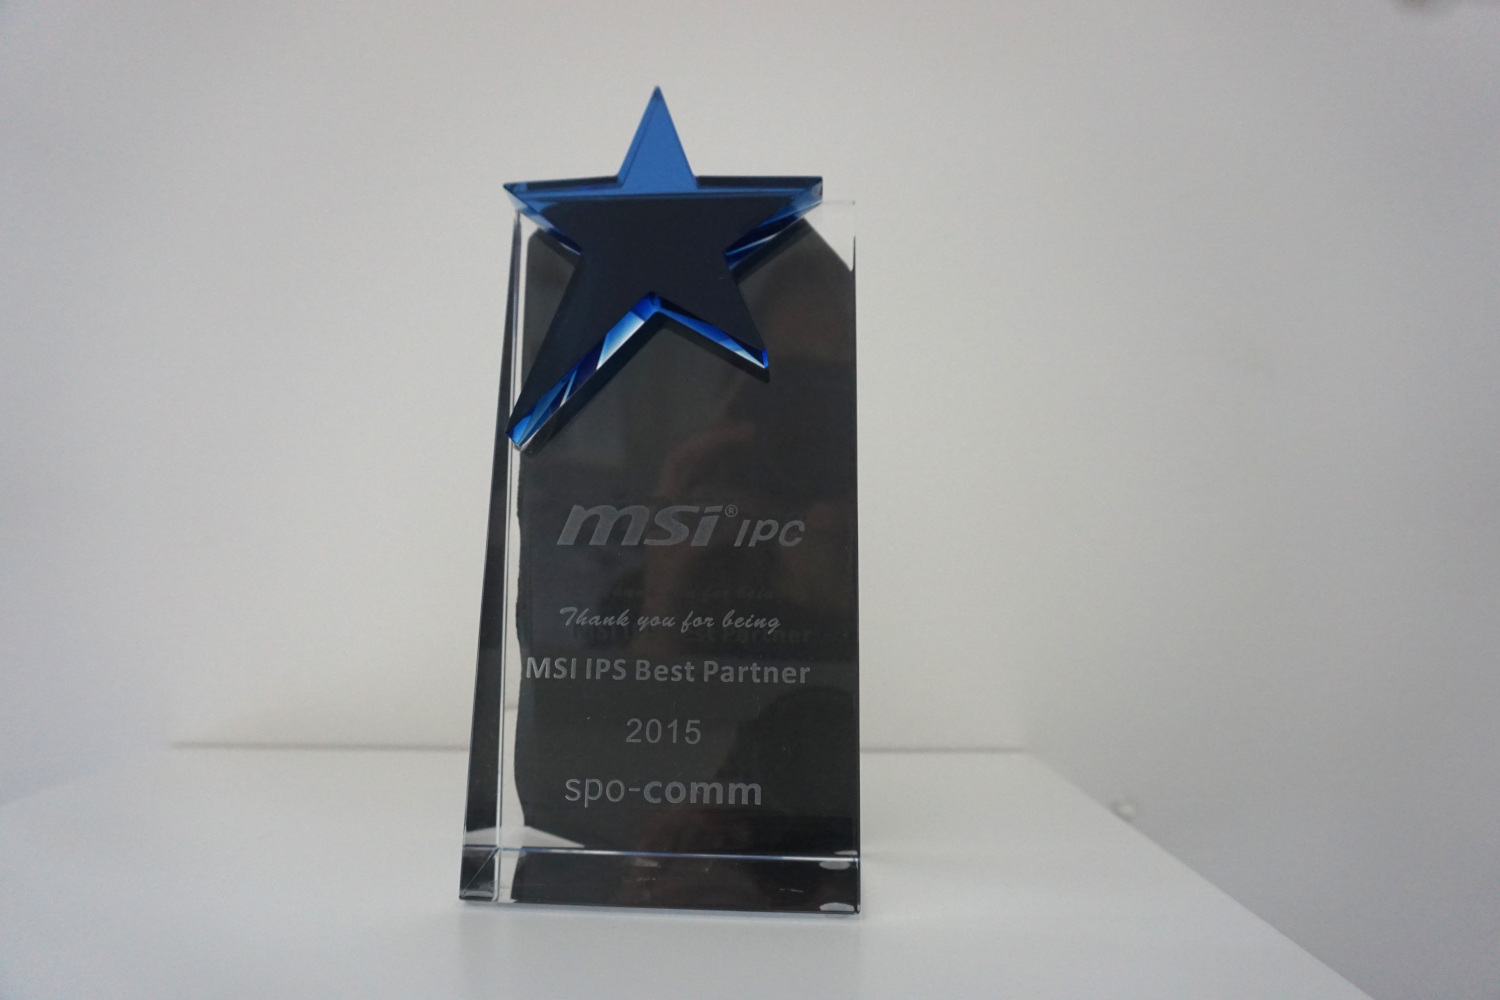 Verleihung des MSI IPC Awards an spo-comm